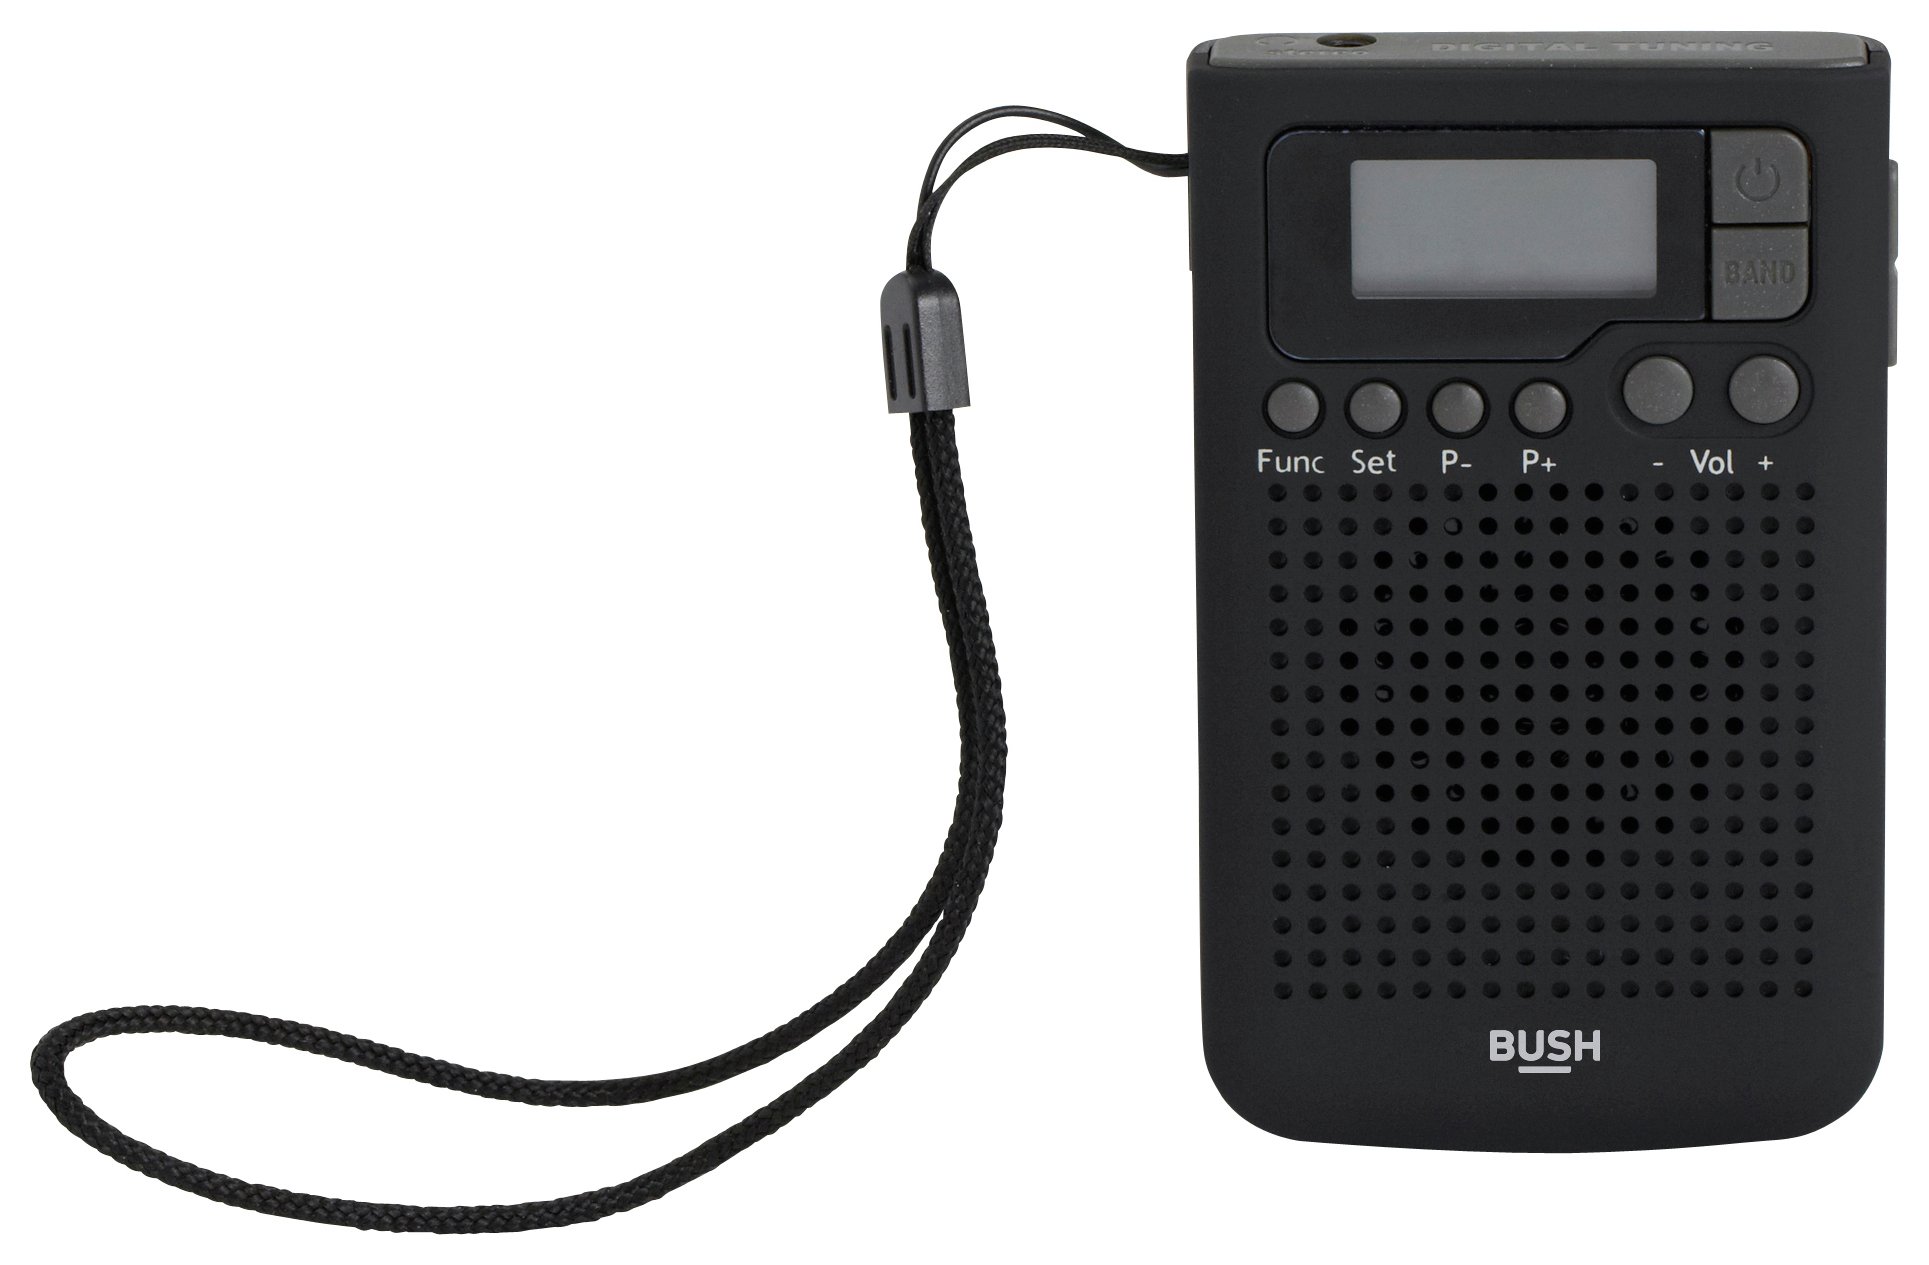 Bush FM Personal Radio